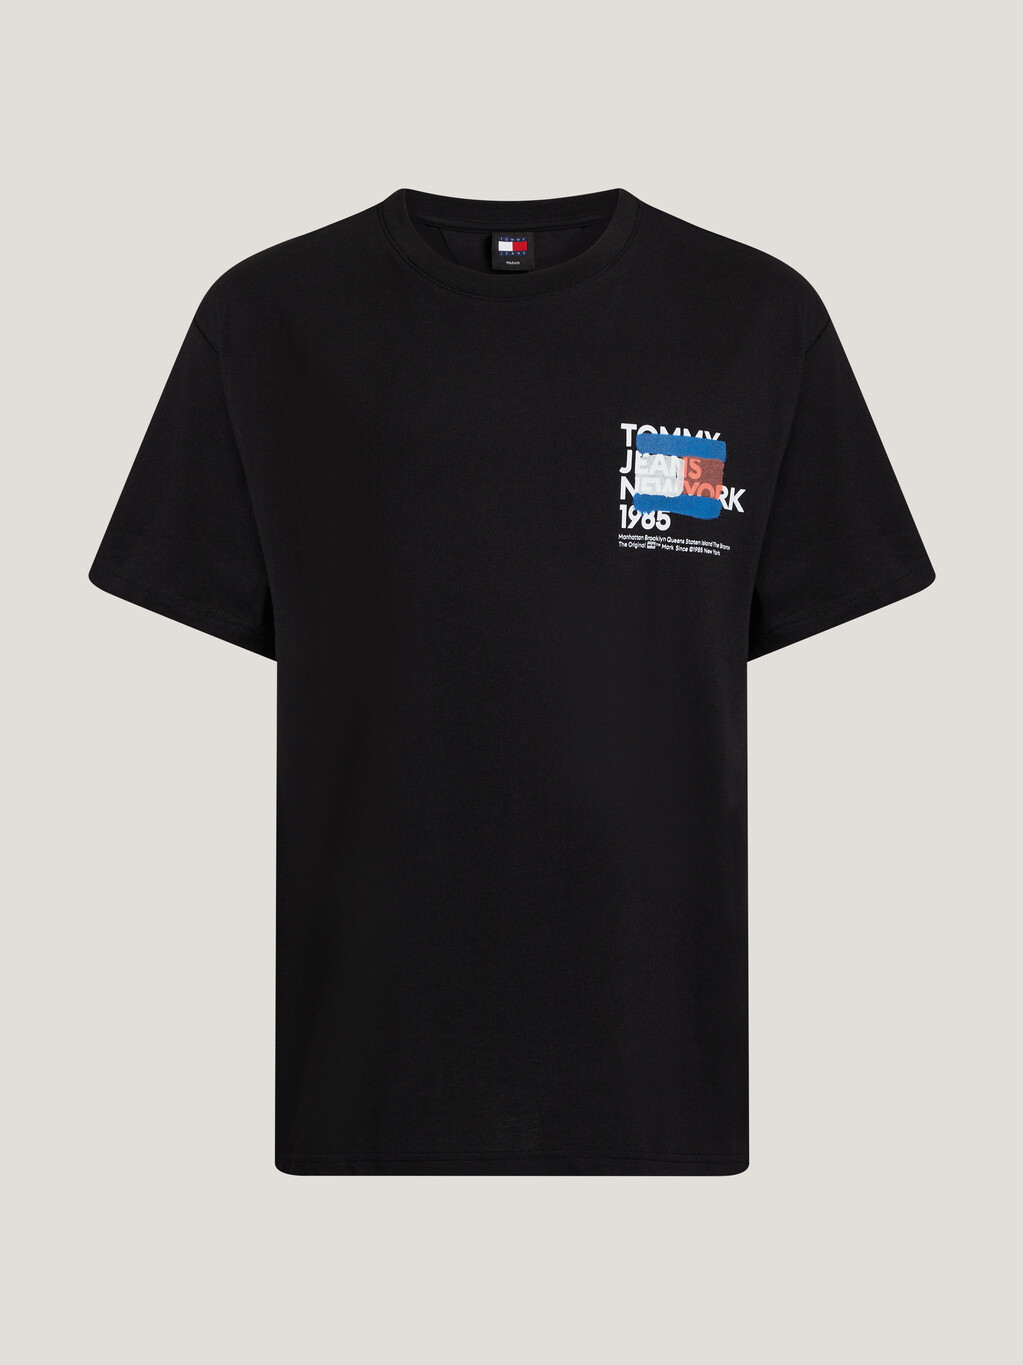 NYC 1985 Graffiti Flag T-Shirt, Black, hi-res